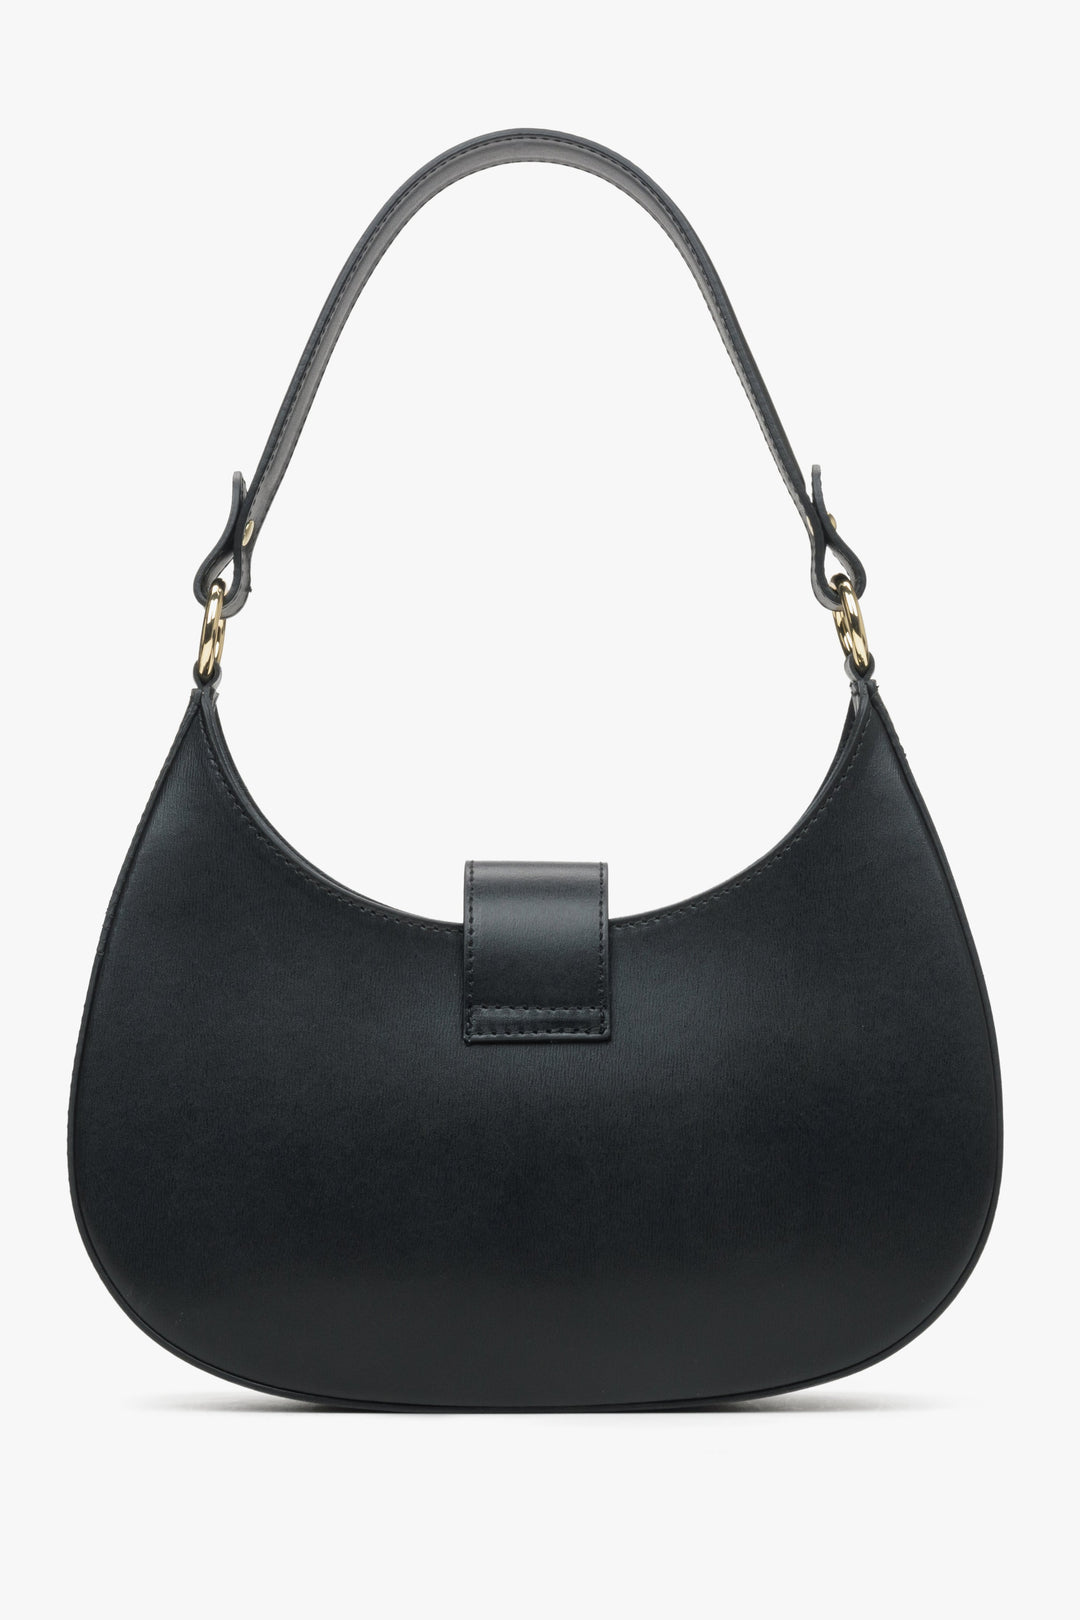 Estro women's leather handbag in black colour - reverse side.